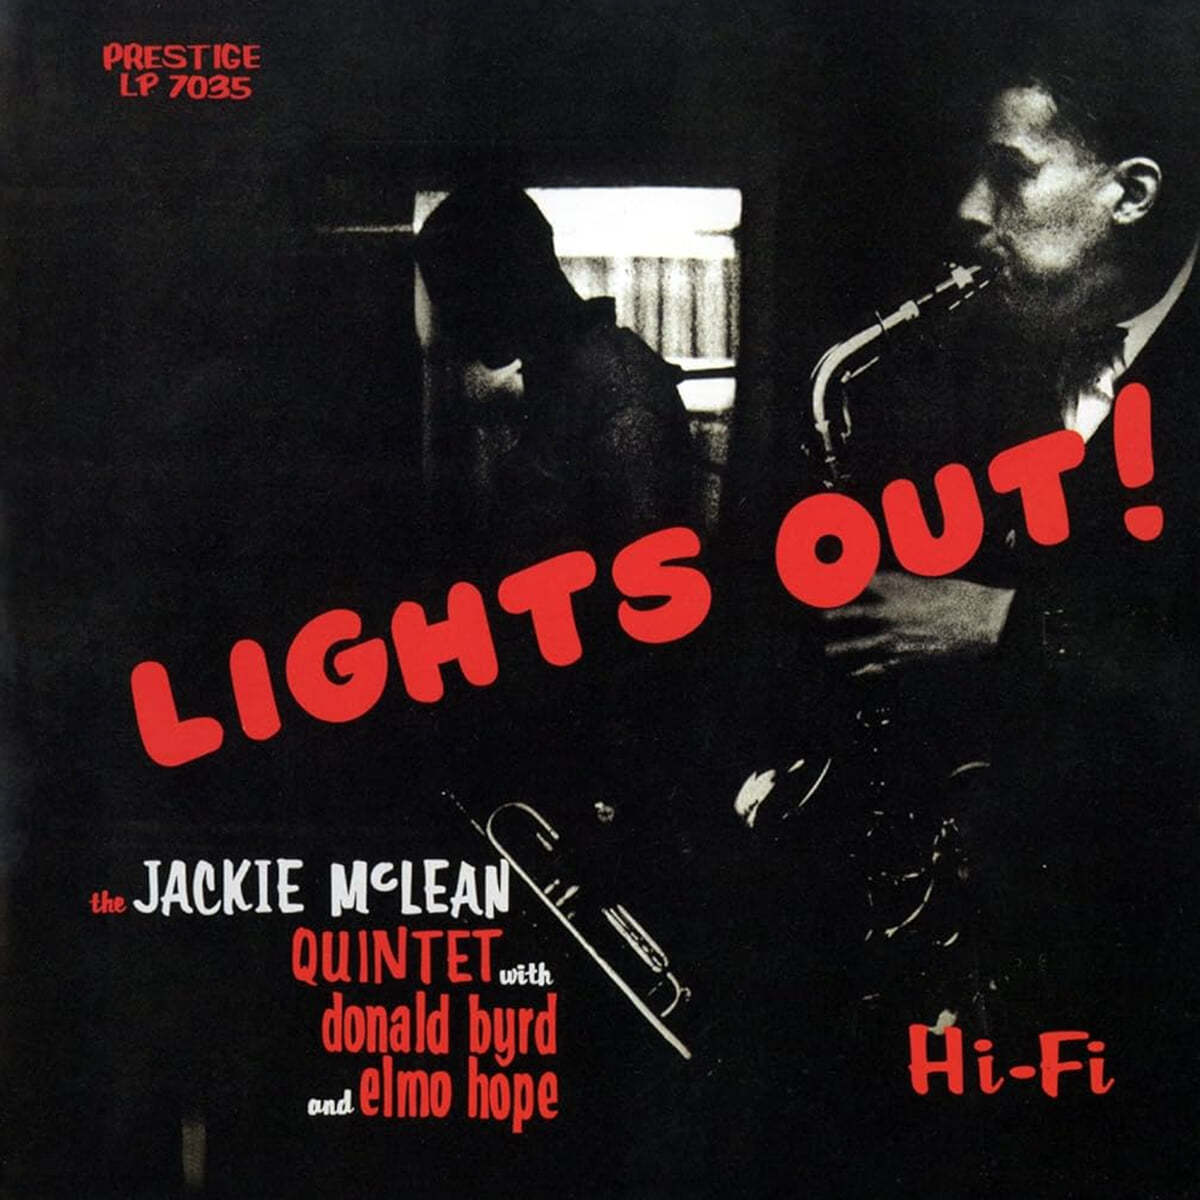 Jackie McLean - Lights Out! [LP]